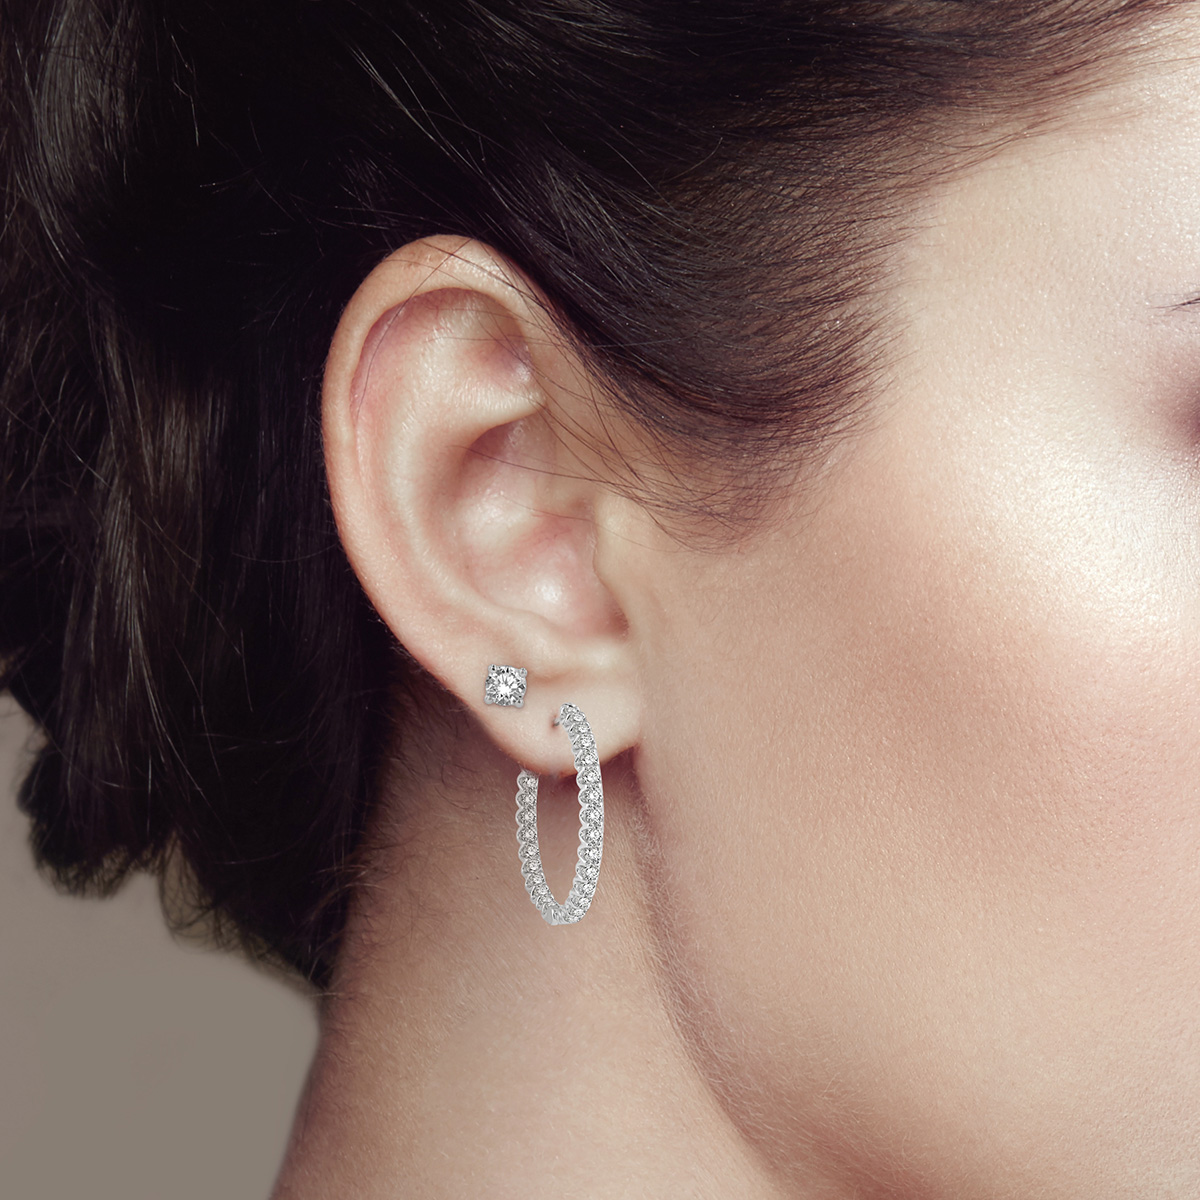 Create a subtle ear stack with our favorite Diamond Essentials 💎
#earjewelry #earstack #earaccessories #earstacking #ASHIDiamonds